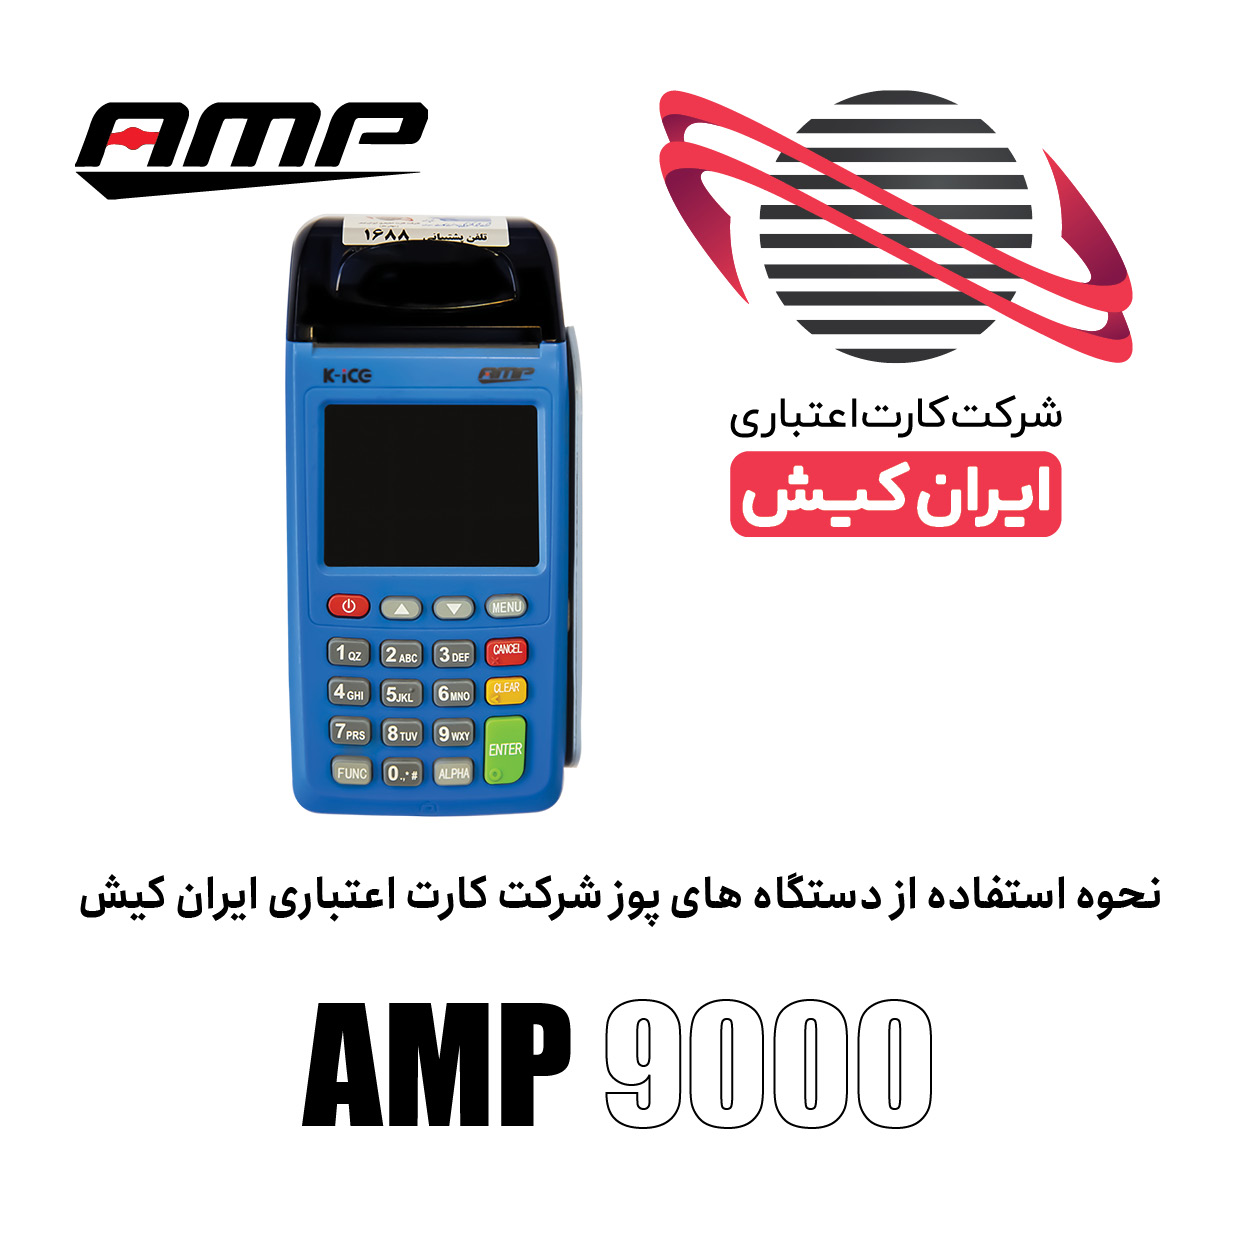 AMP_9000_POS